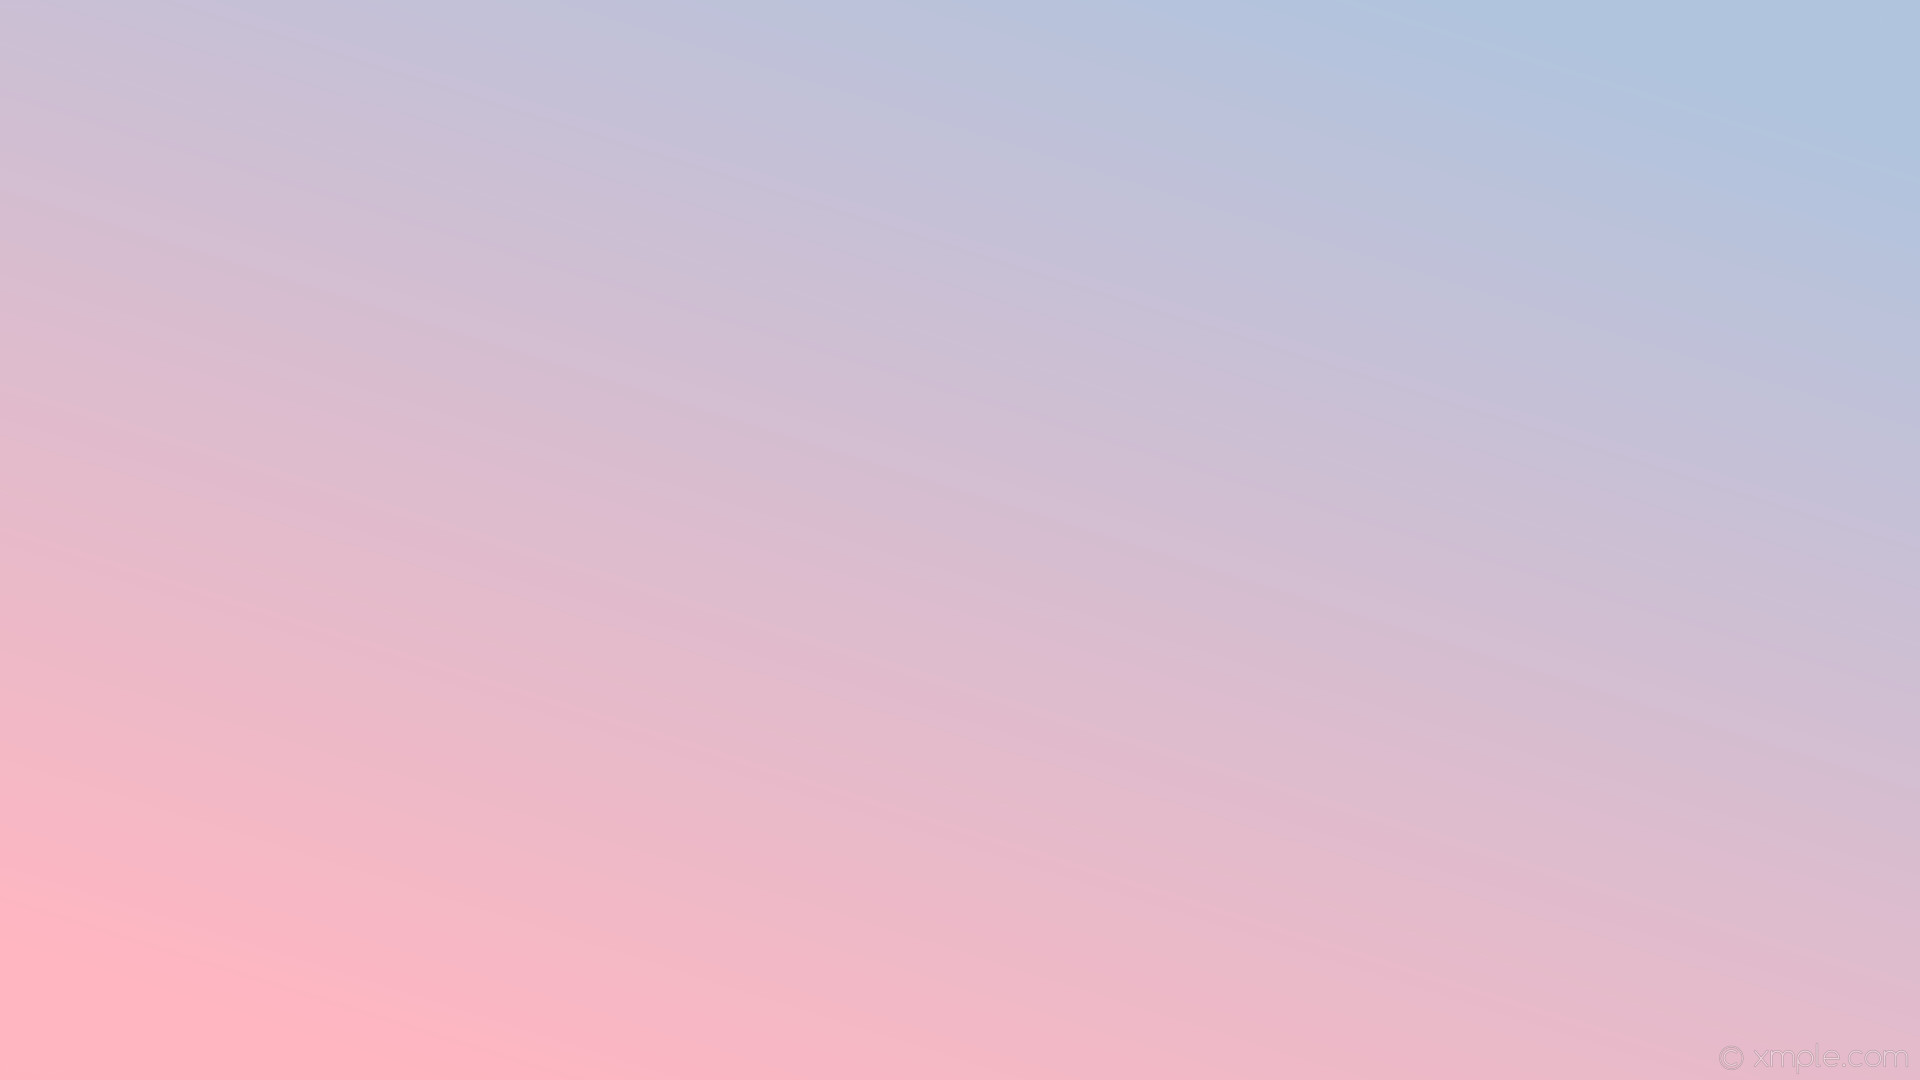 1920x1080 wallpaper blue pink gradient linear light pink light steel blue #ffb6c1  #b0c4de 225Â°